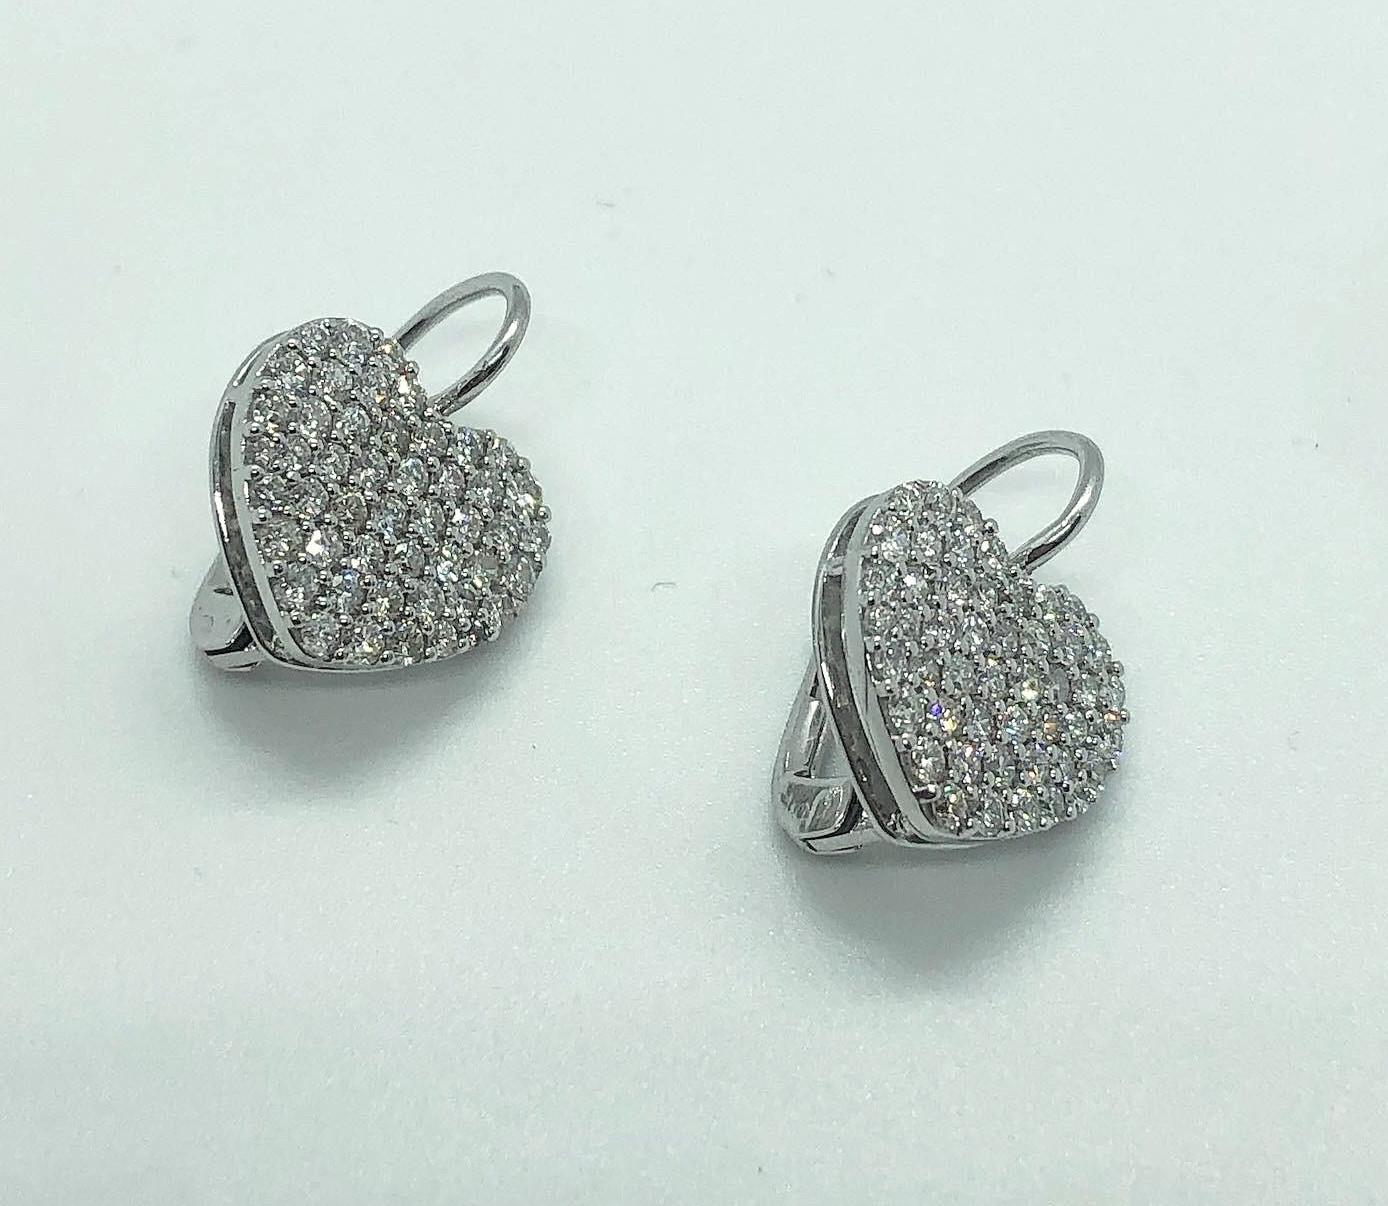 1/2 carat diamond earrings